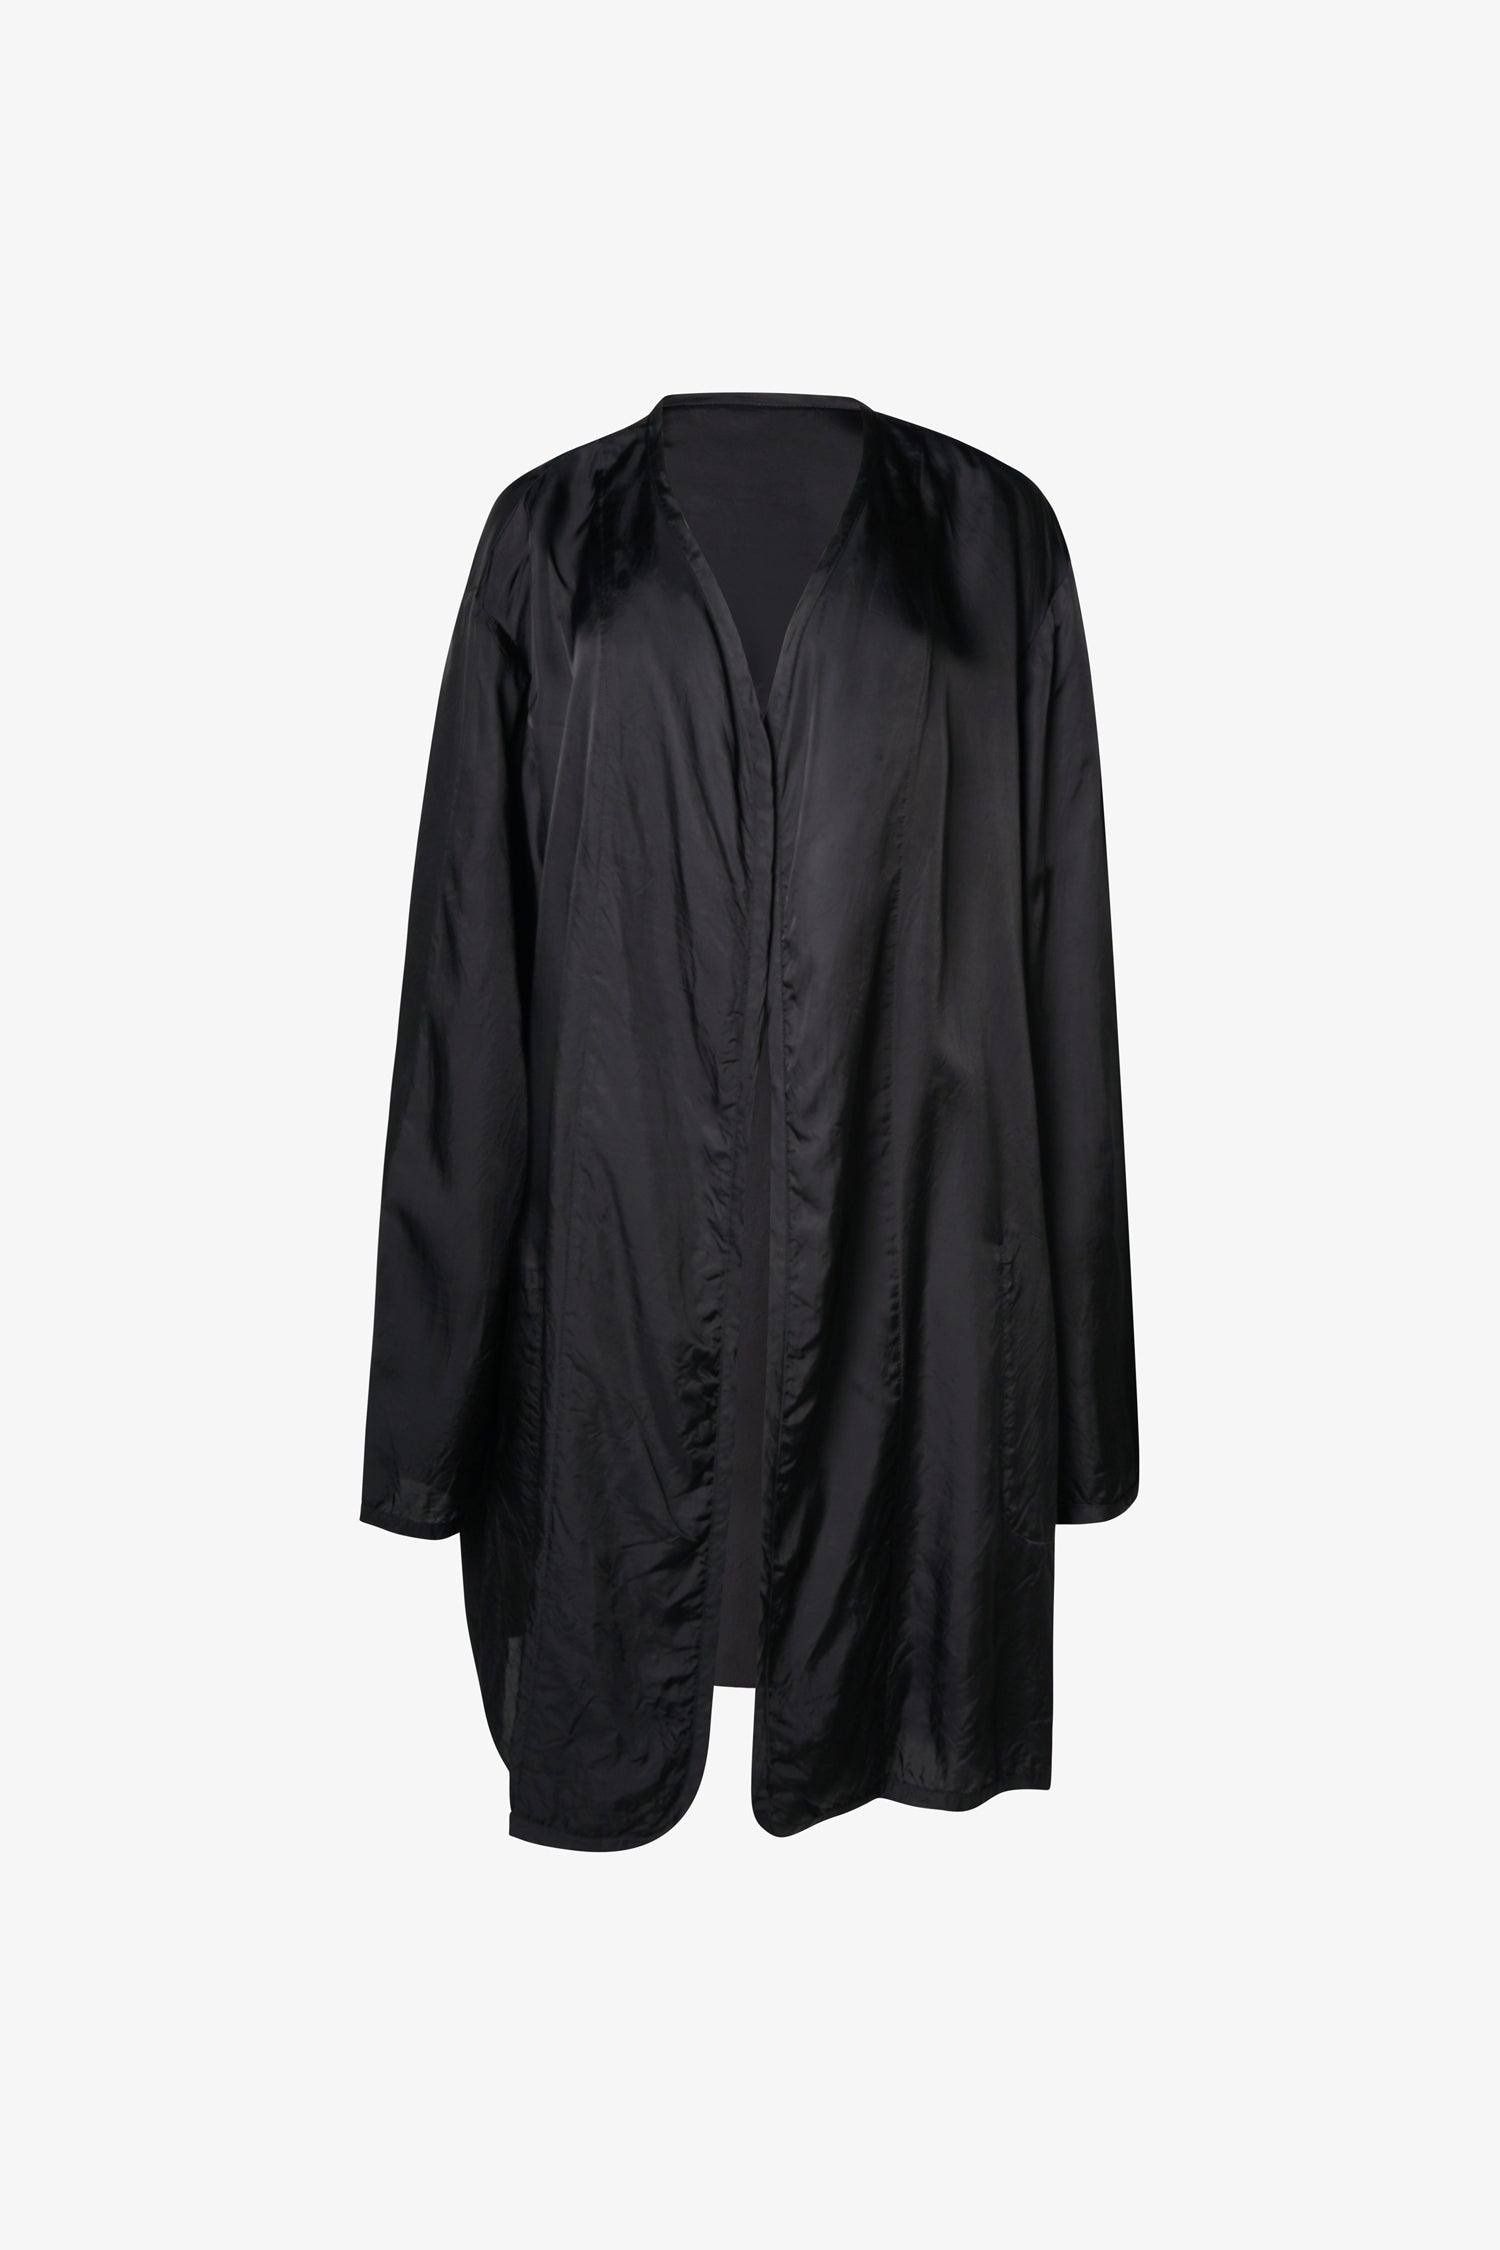 Selectshop FRAME - COMME DES GARÇONS BLACK Embroidered Liner Coat Outerwear Dubai